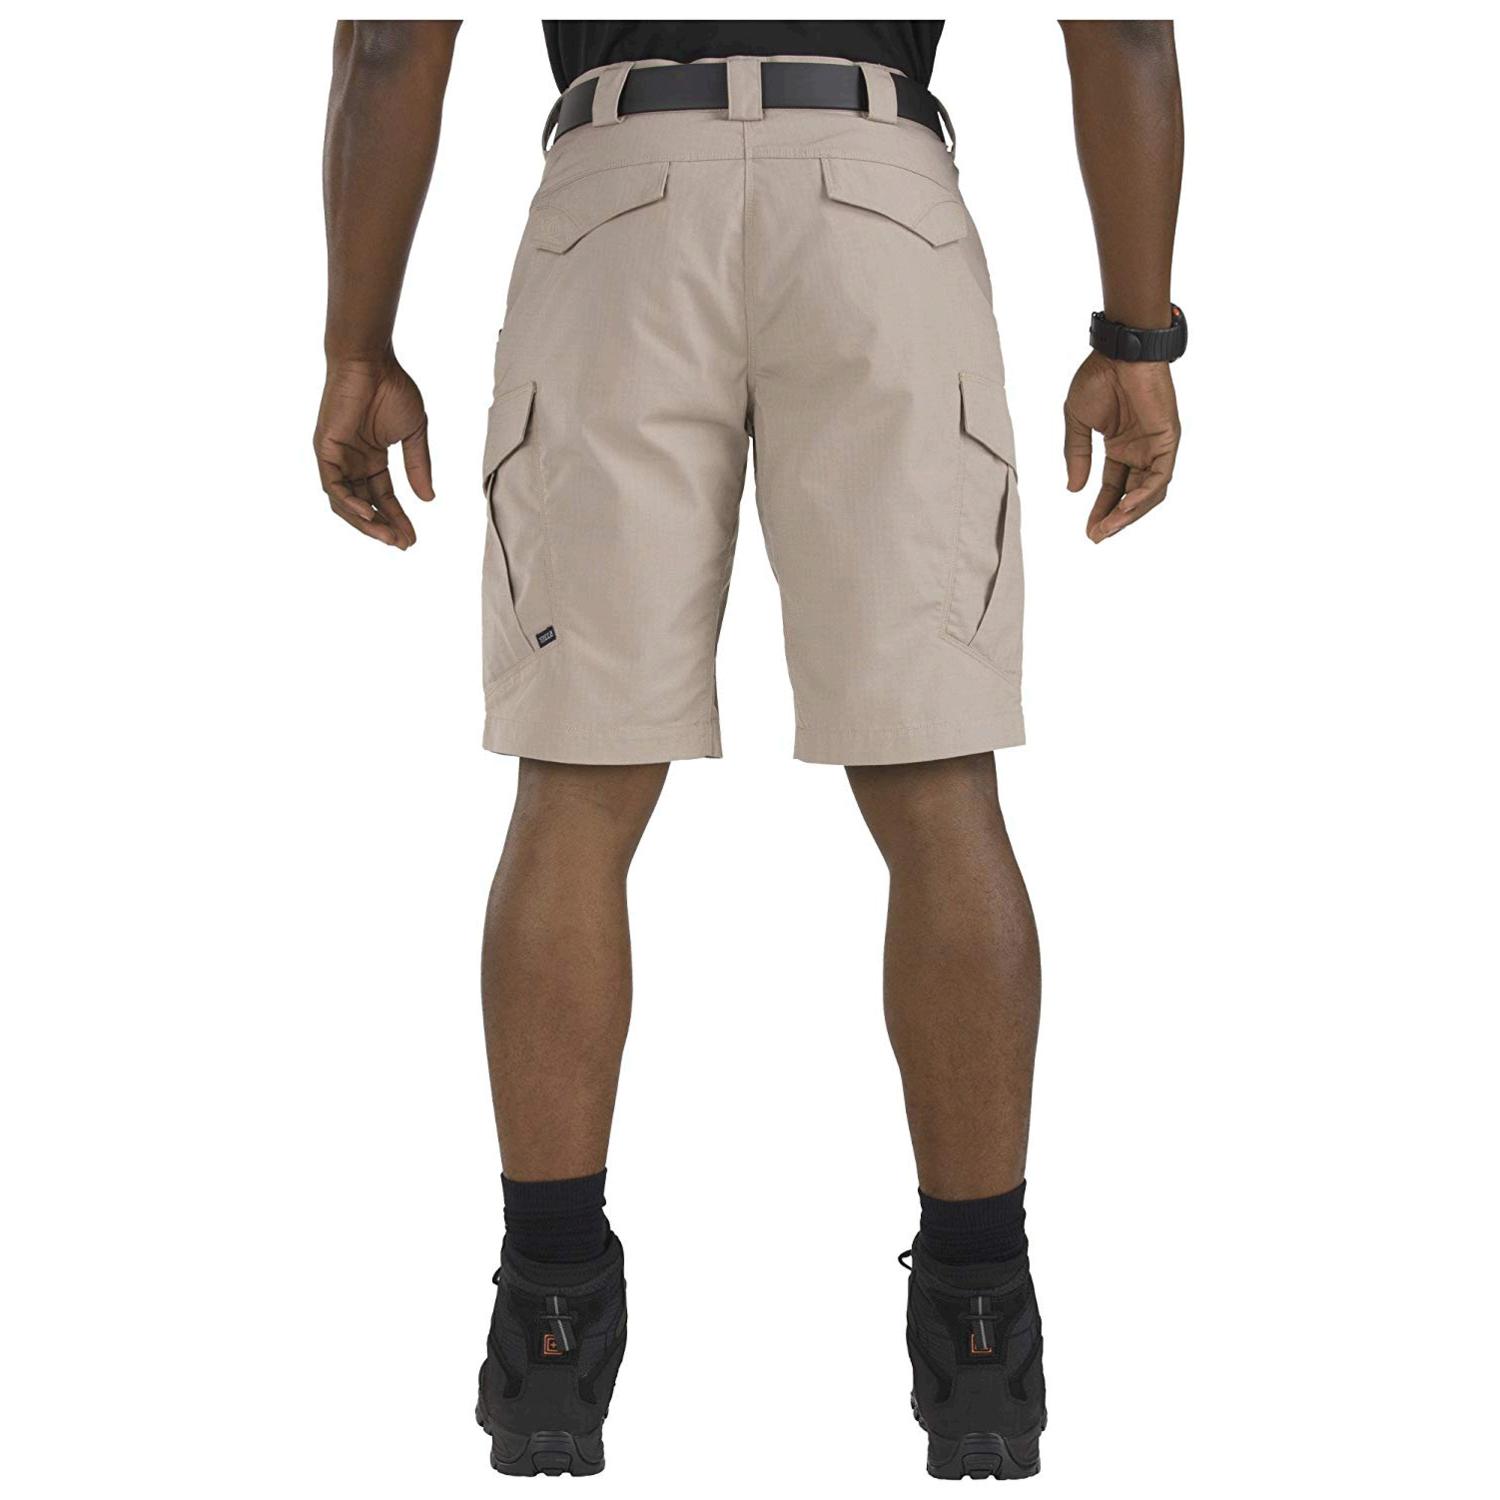 5.11 Tactical Men's Stryke 11-Inch Inseam Military Shorts,, Khaki, Size